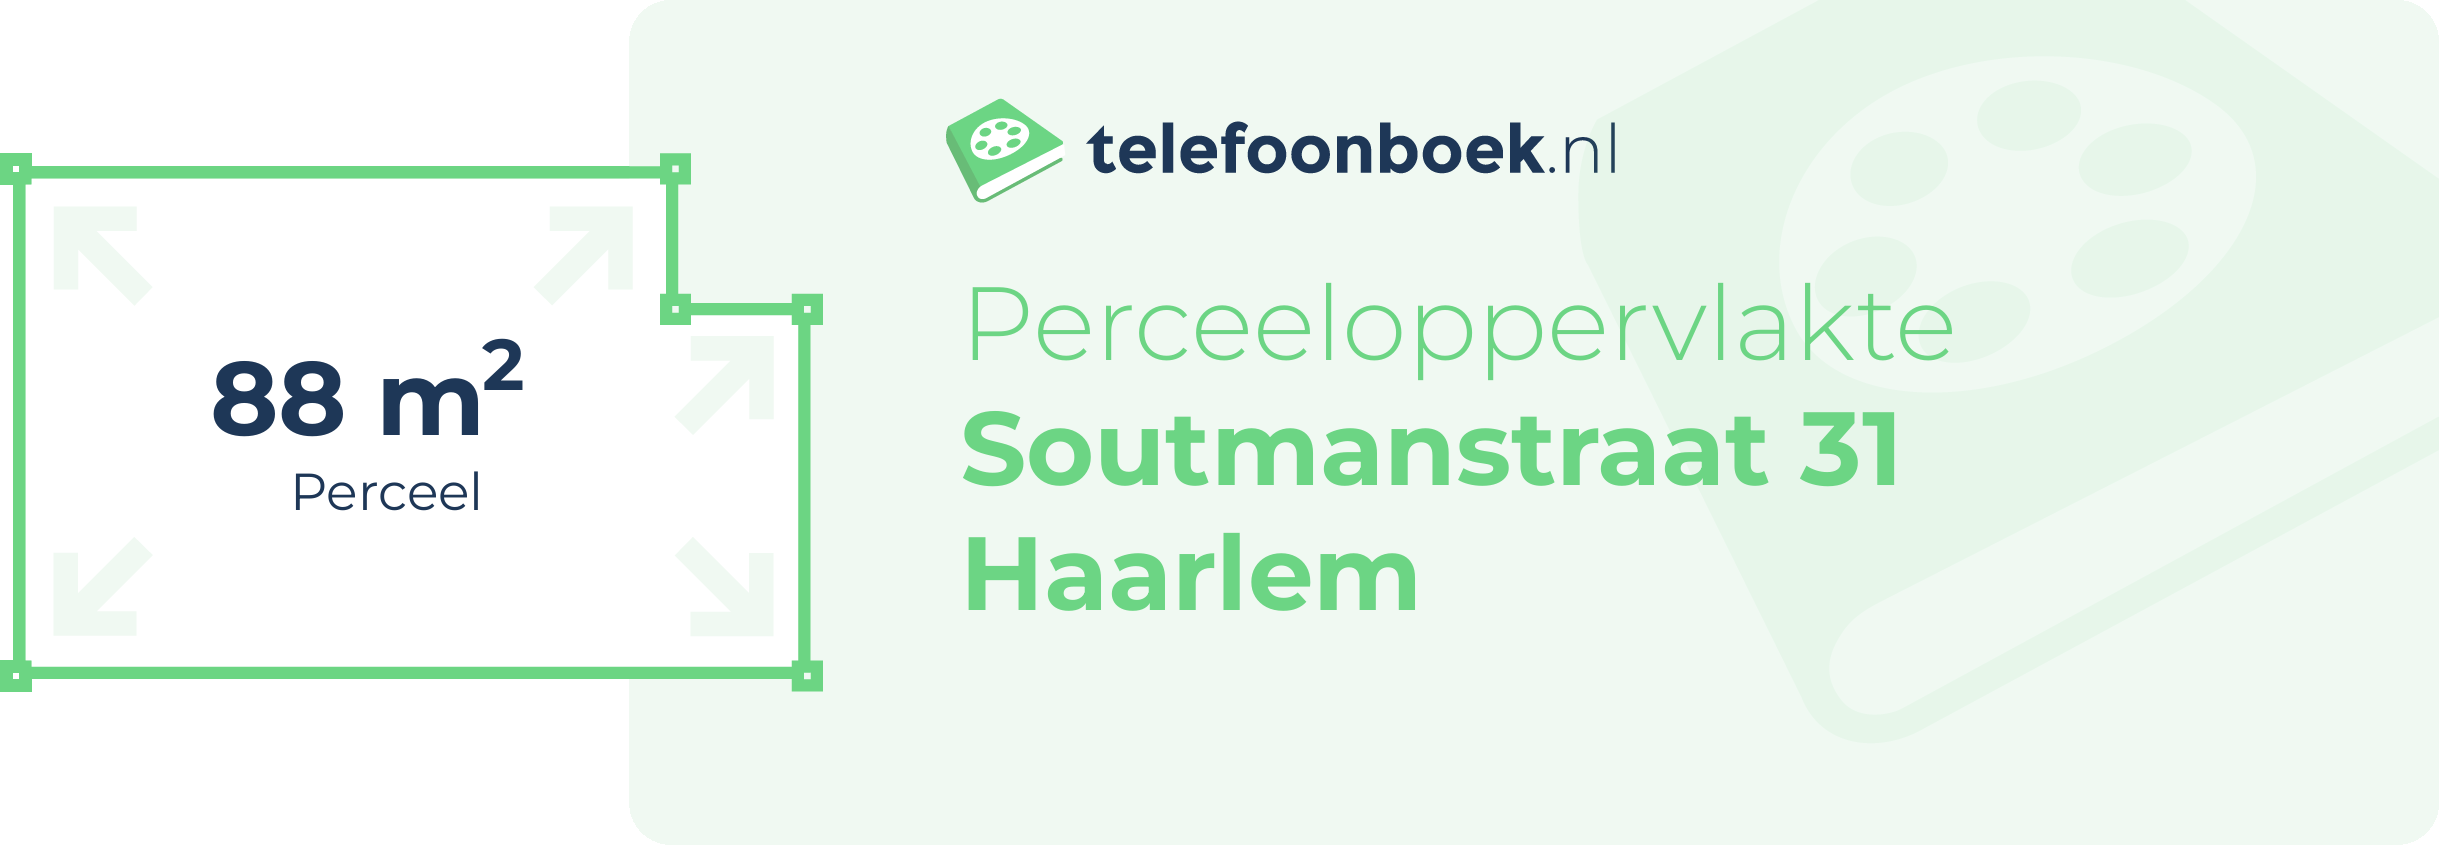 Perceeloppervlakte Soutmanstraat 31 Haarlem